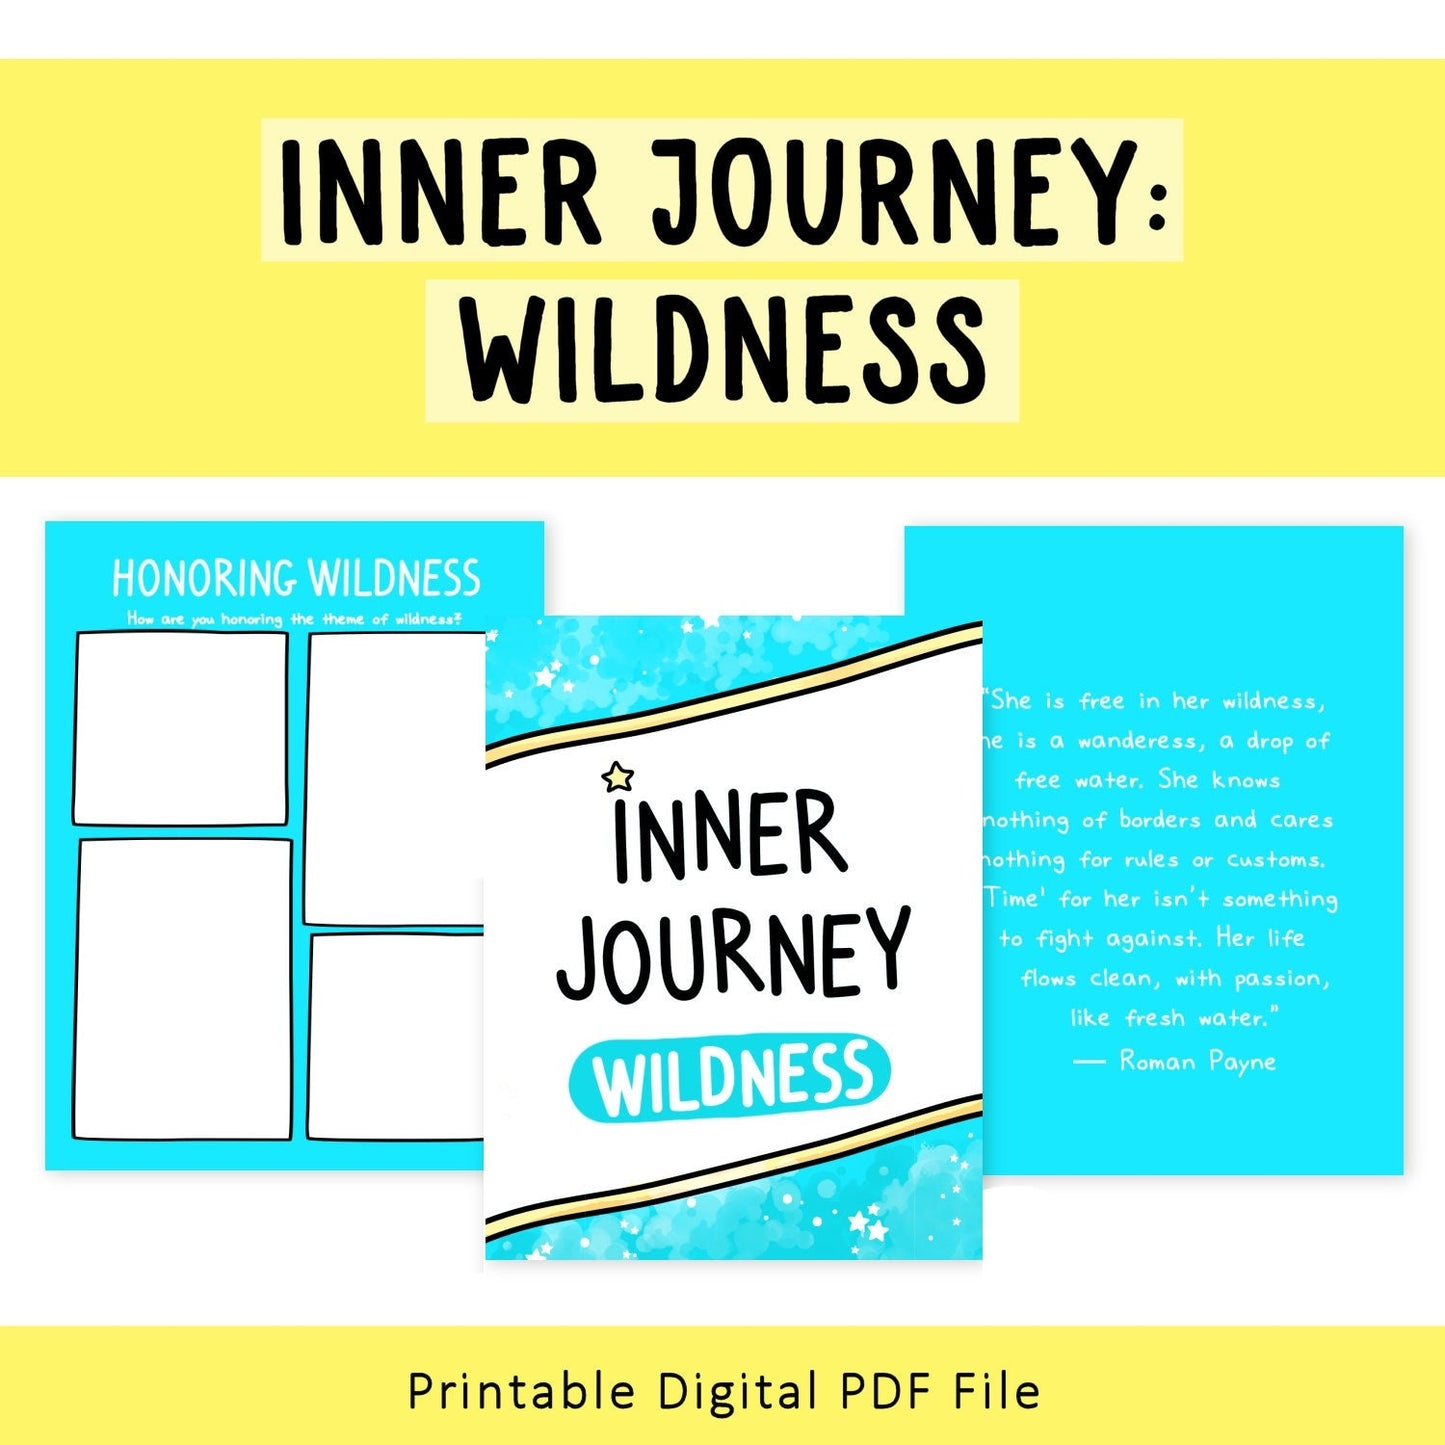 Inner Journey: Wildness